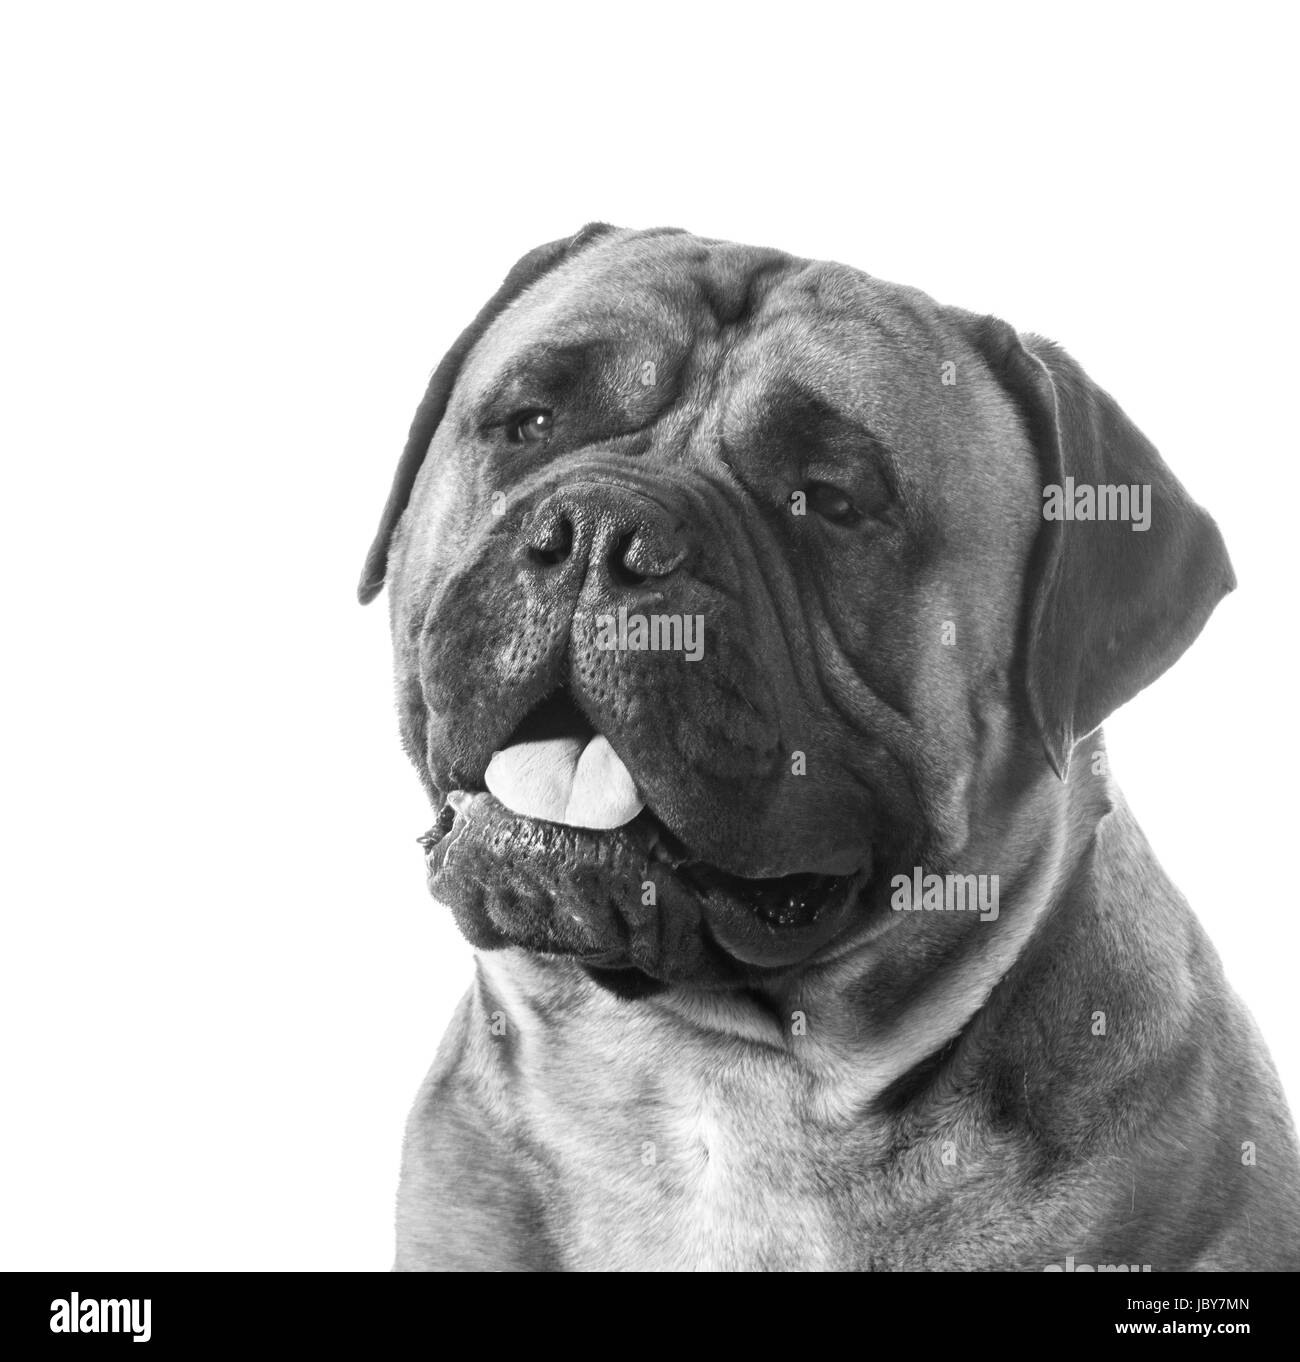 Bullmastiff Puppy Black and White Stock Photos & Images - Alamy